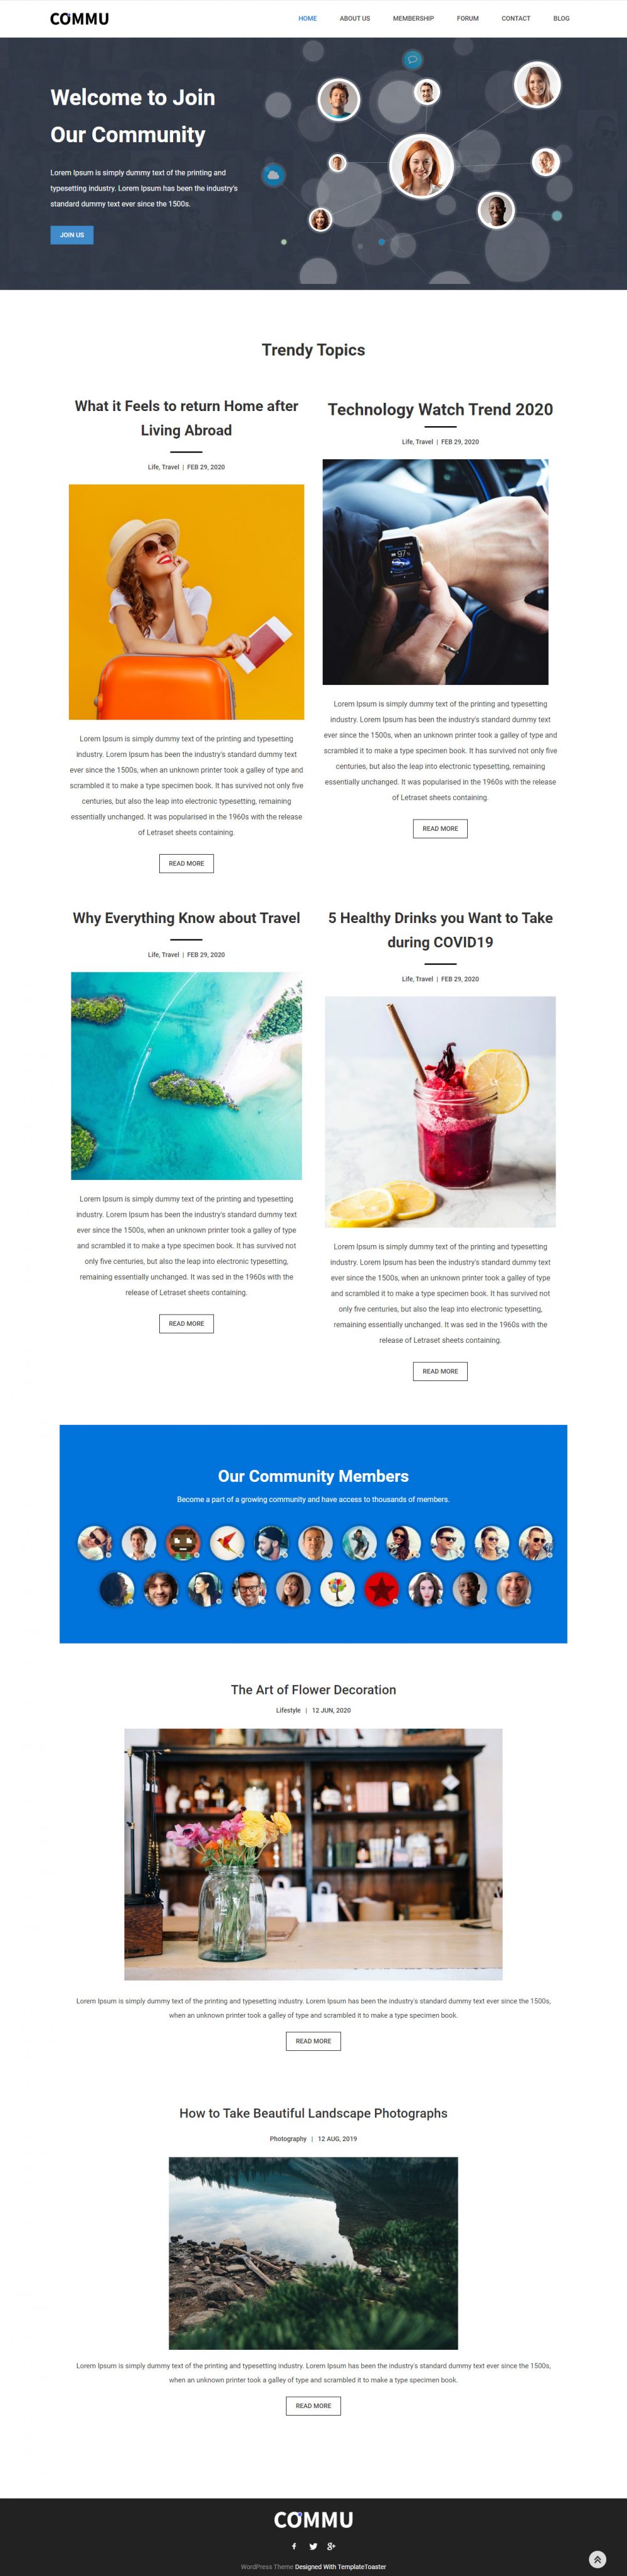 Commu - Social Networking & Community WordPress Theme